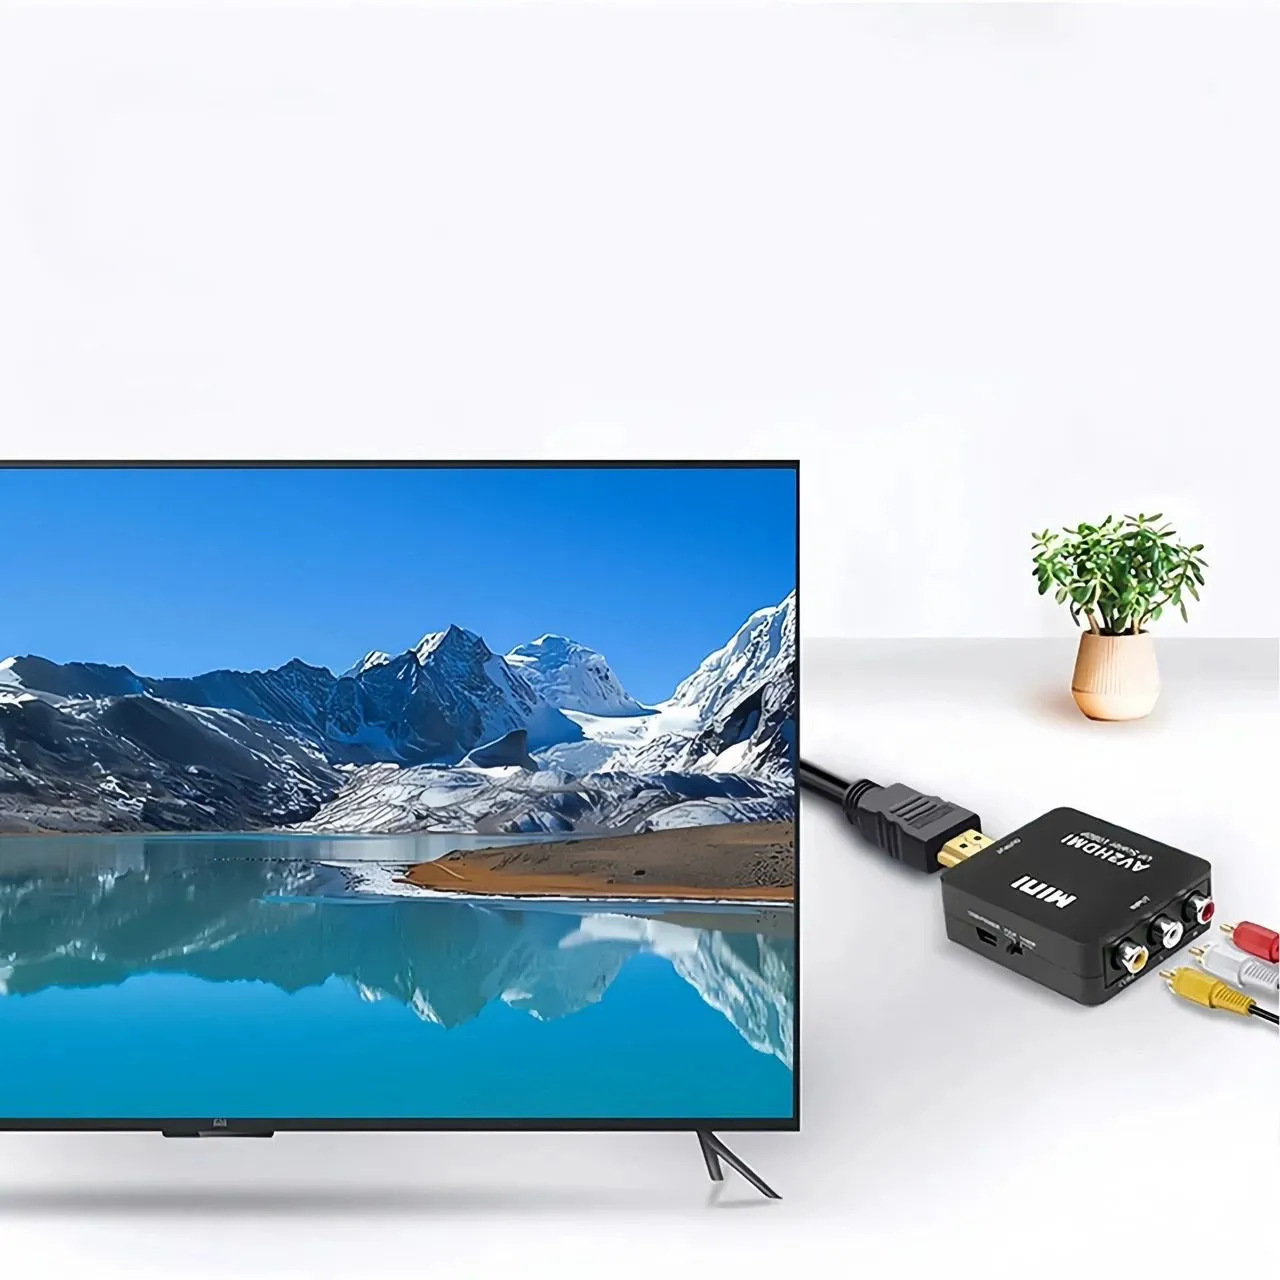 RCA HDMI conversion adapter AV to HDMI converter adaptor AV - HDMI Composite HDMI conversion adapter 1080P correspondence 